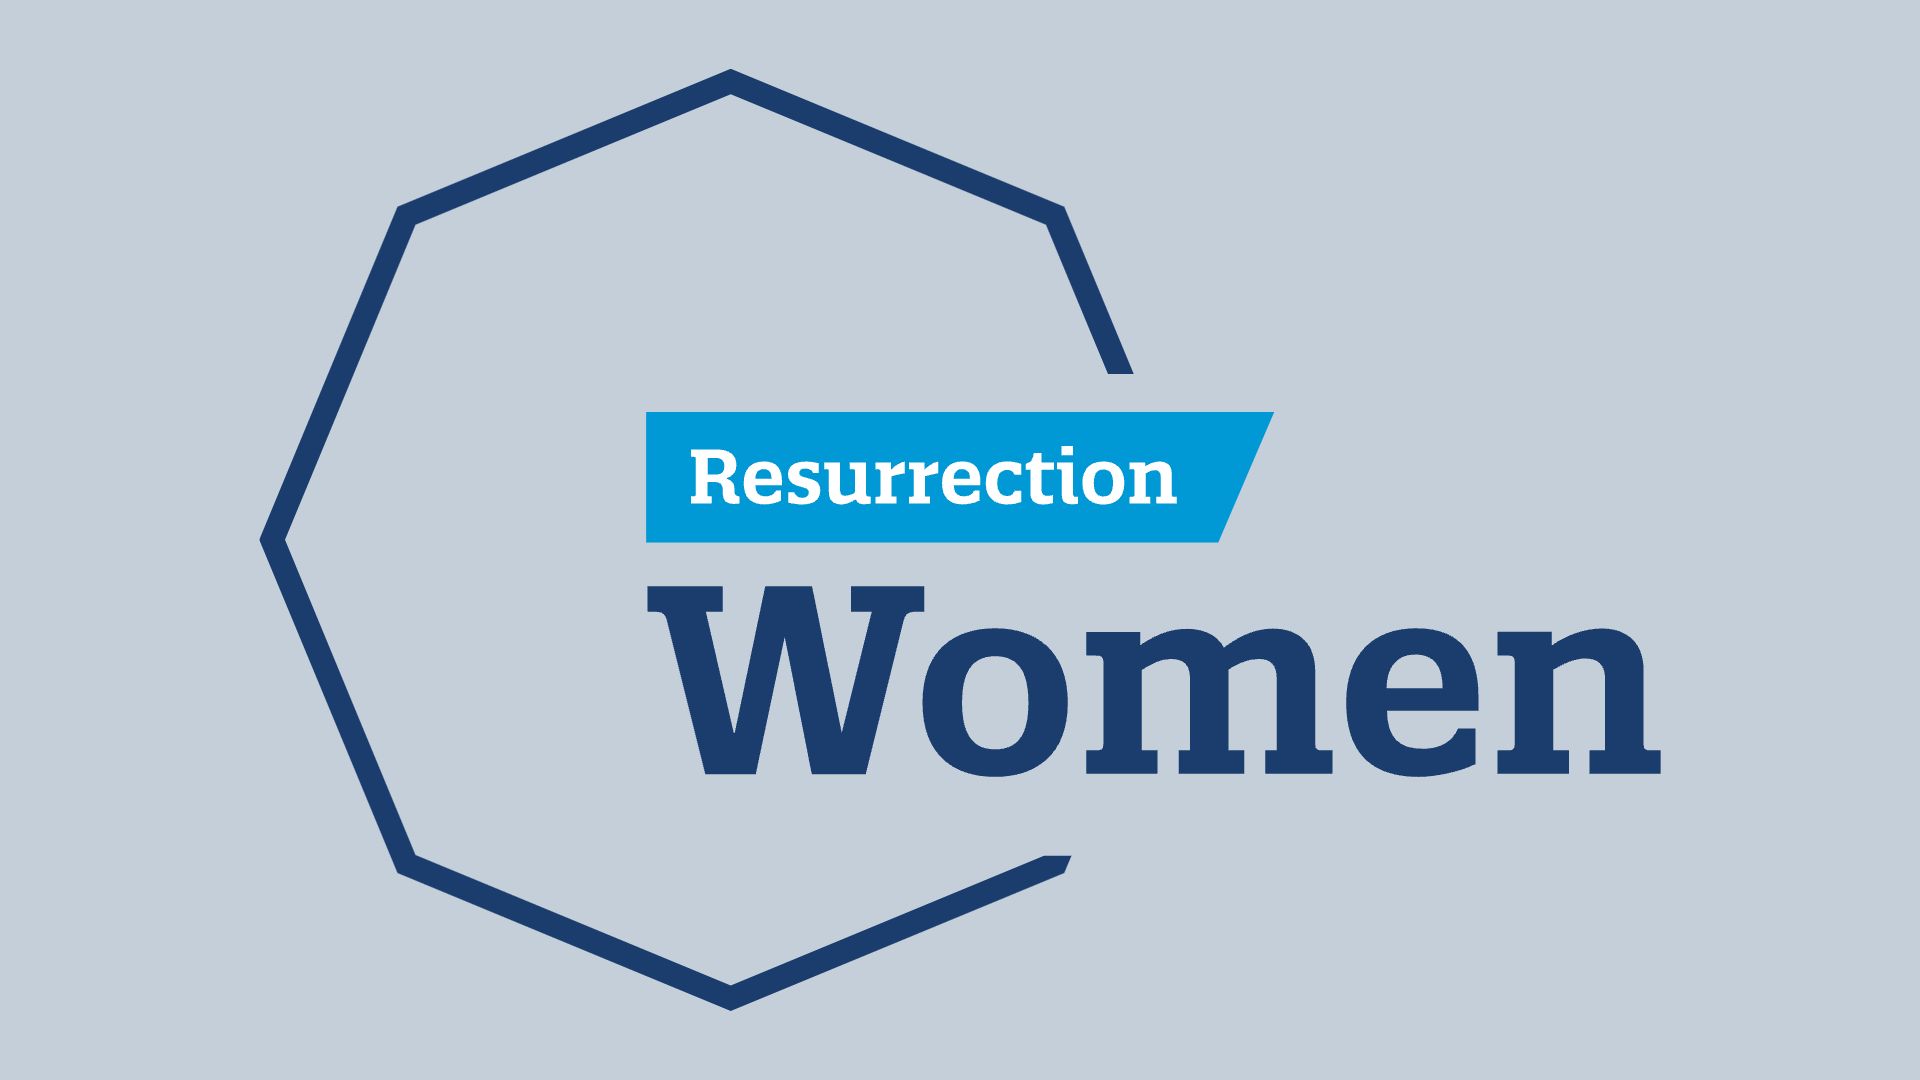 Resurrection Women_Grey Background - 1920x1080